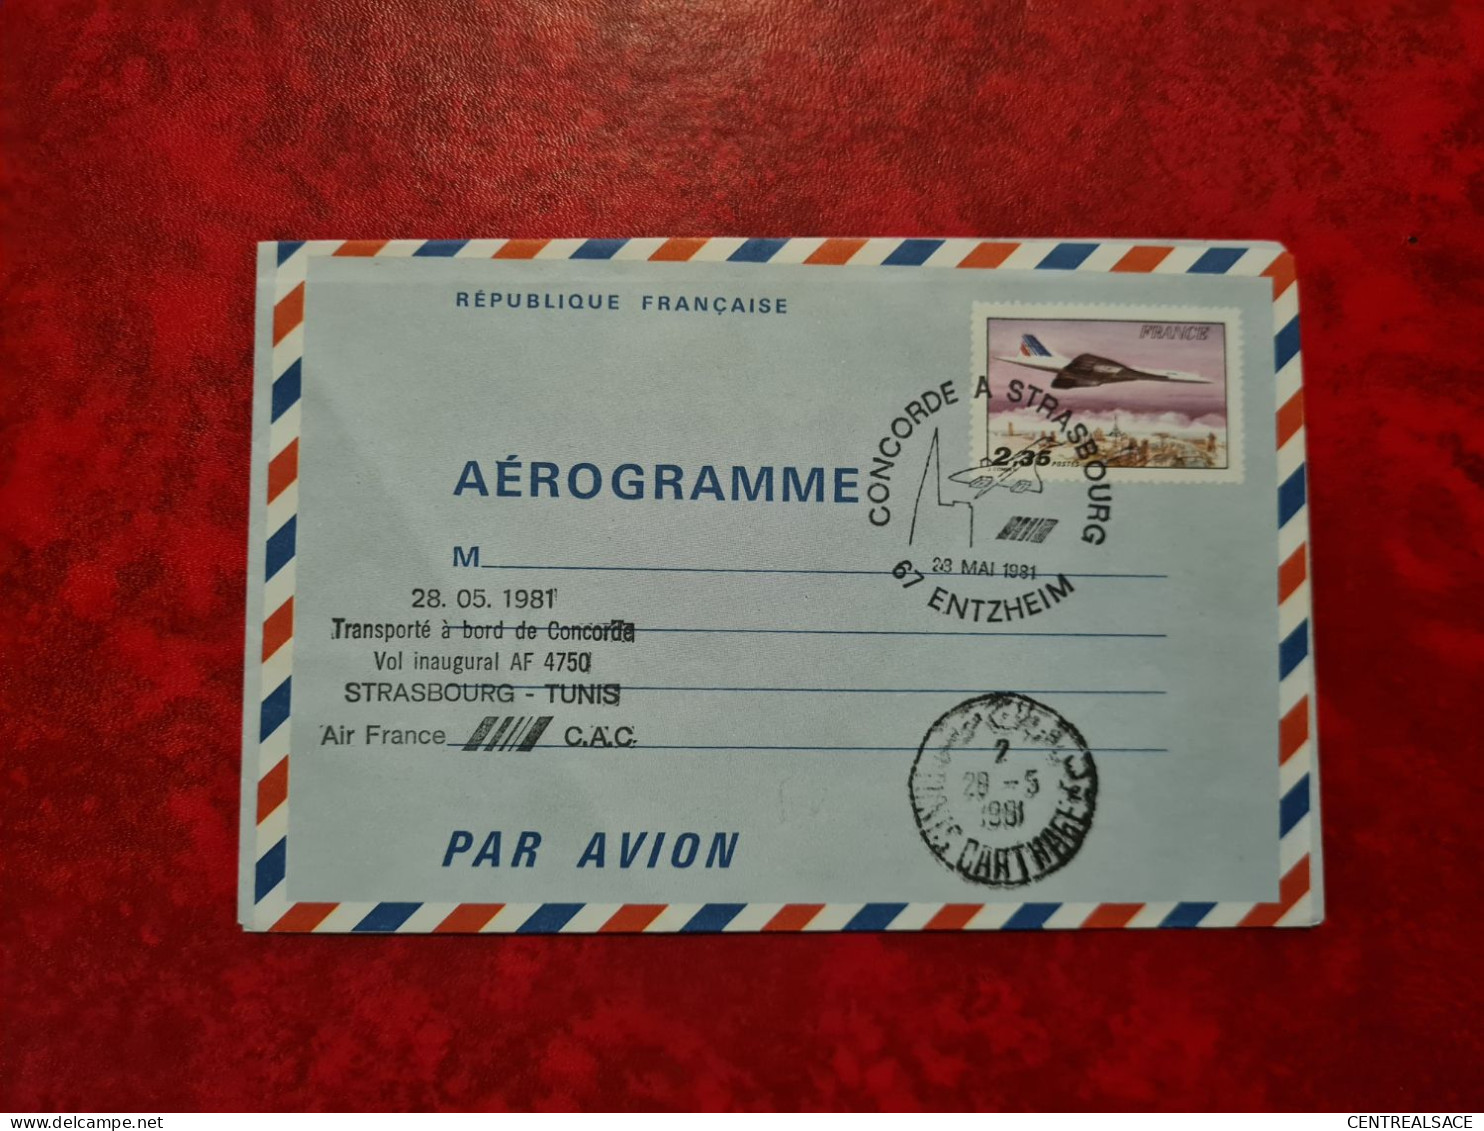 AEROGRAMME 1981 CONCORDE A STRASBOURG ENTZHEIM VOL INAUGURAL STRASBOURG TUNIS - Aerogramme